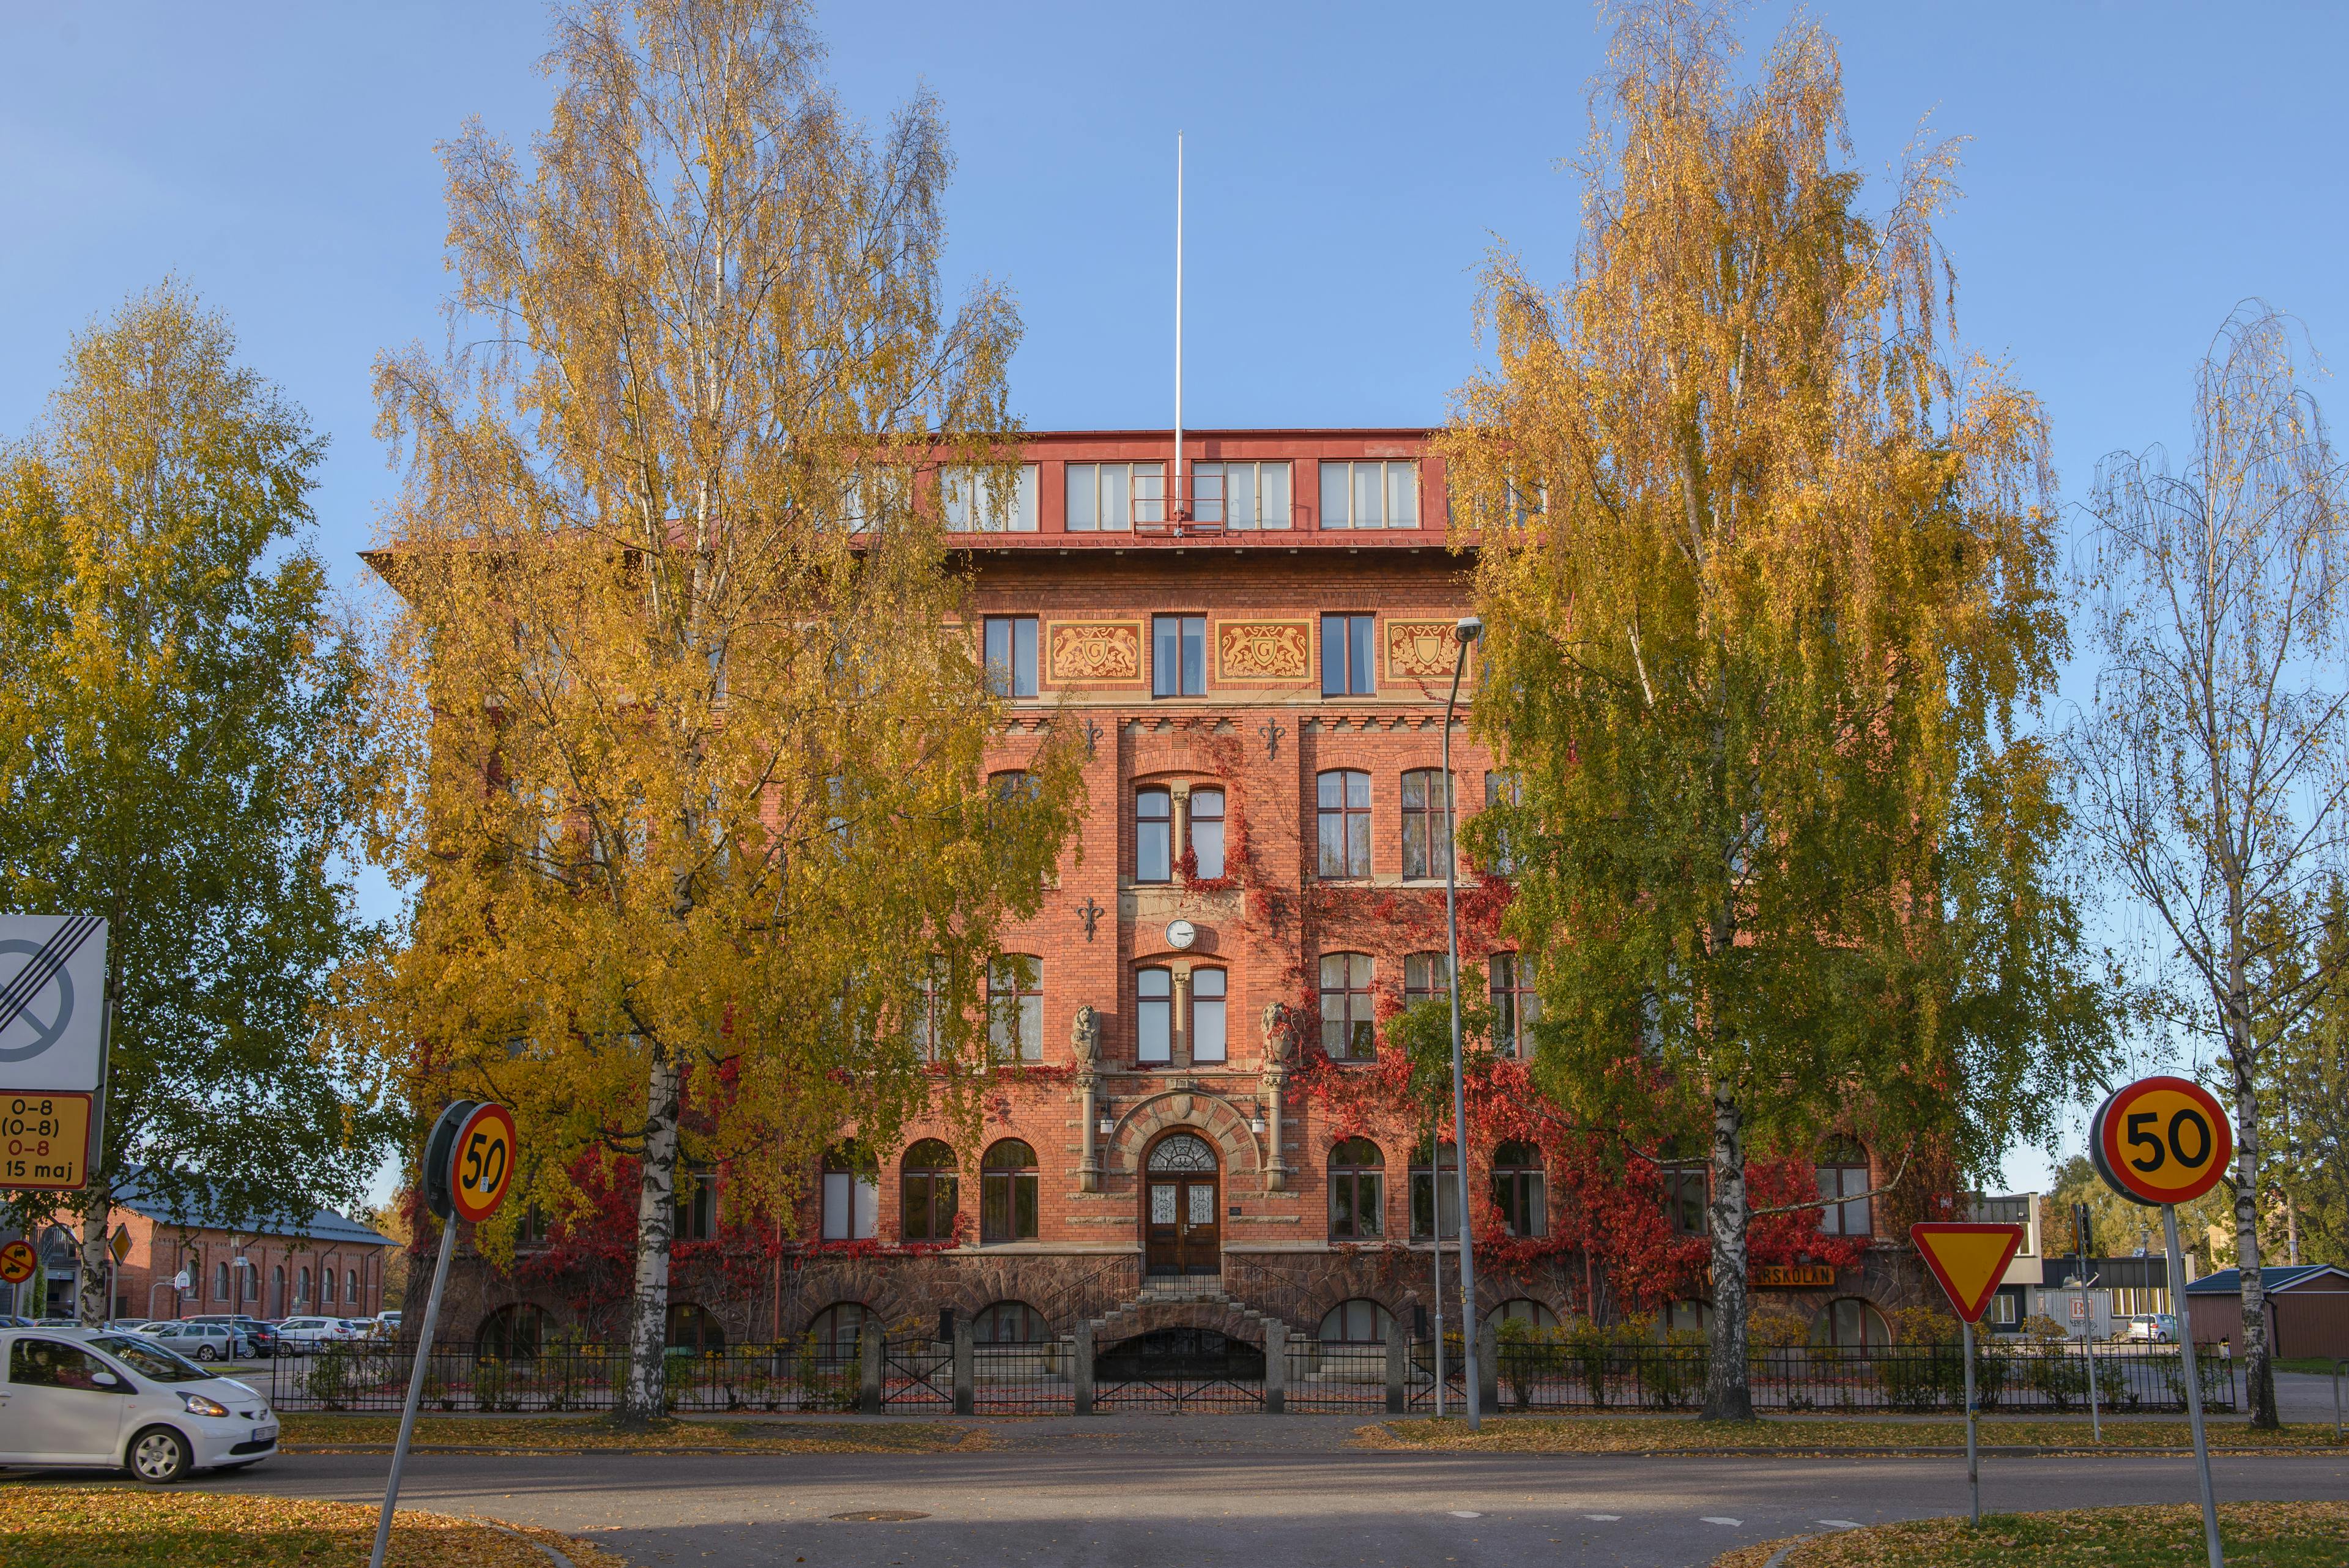 Borgarskolan i Gävle